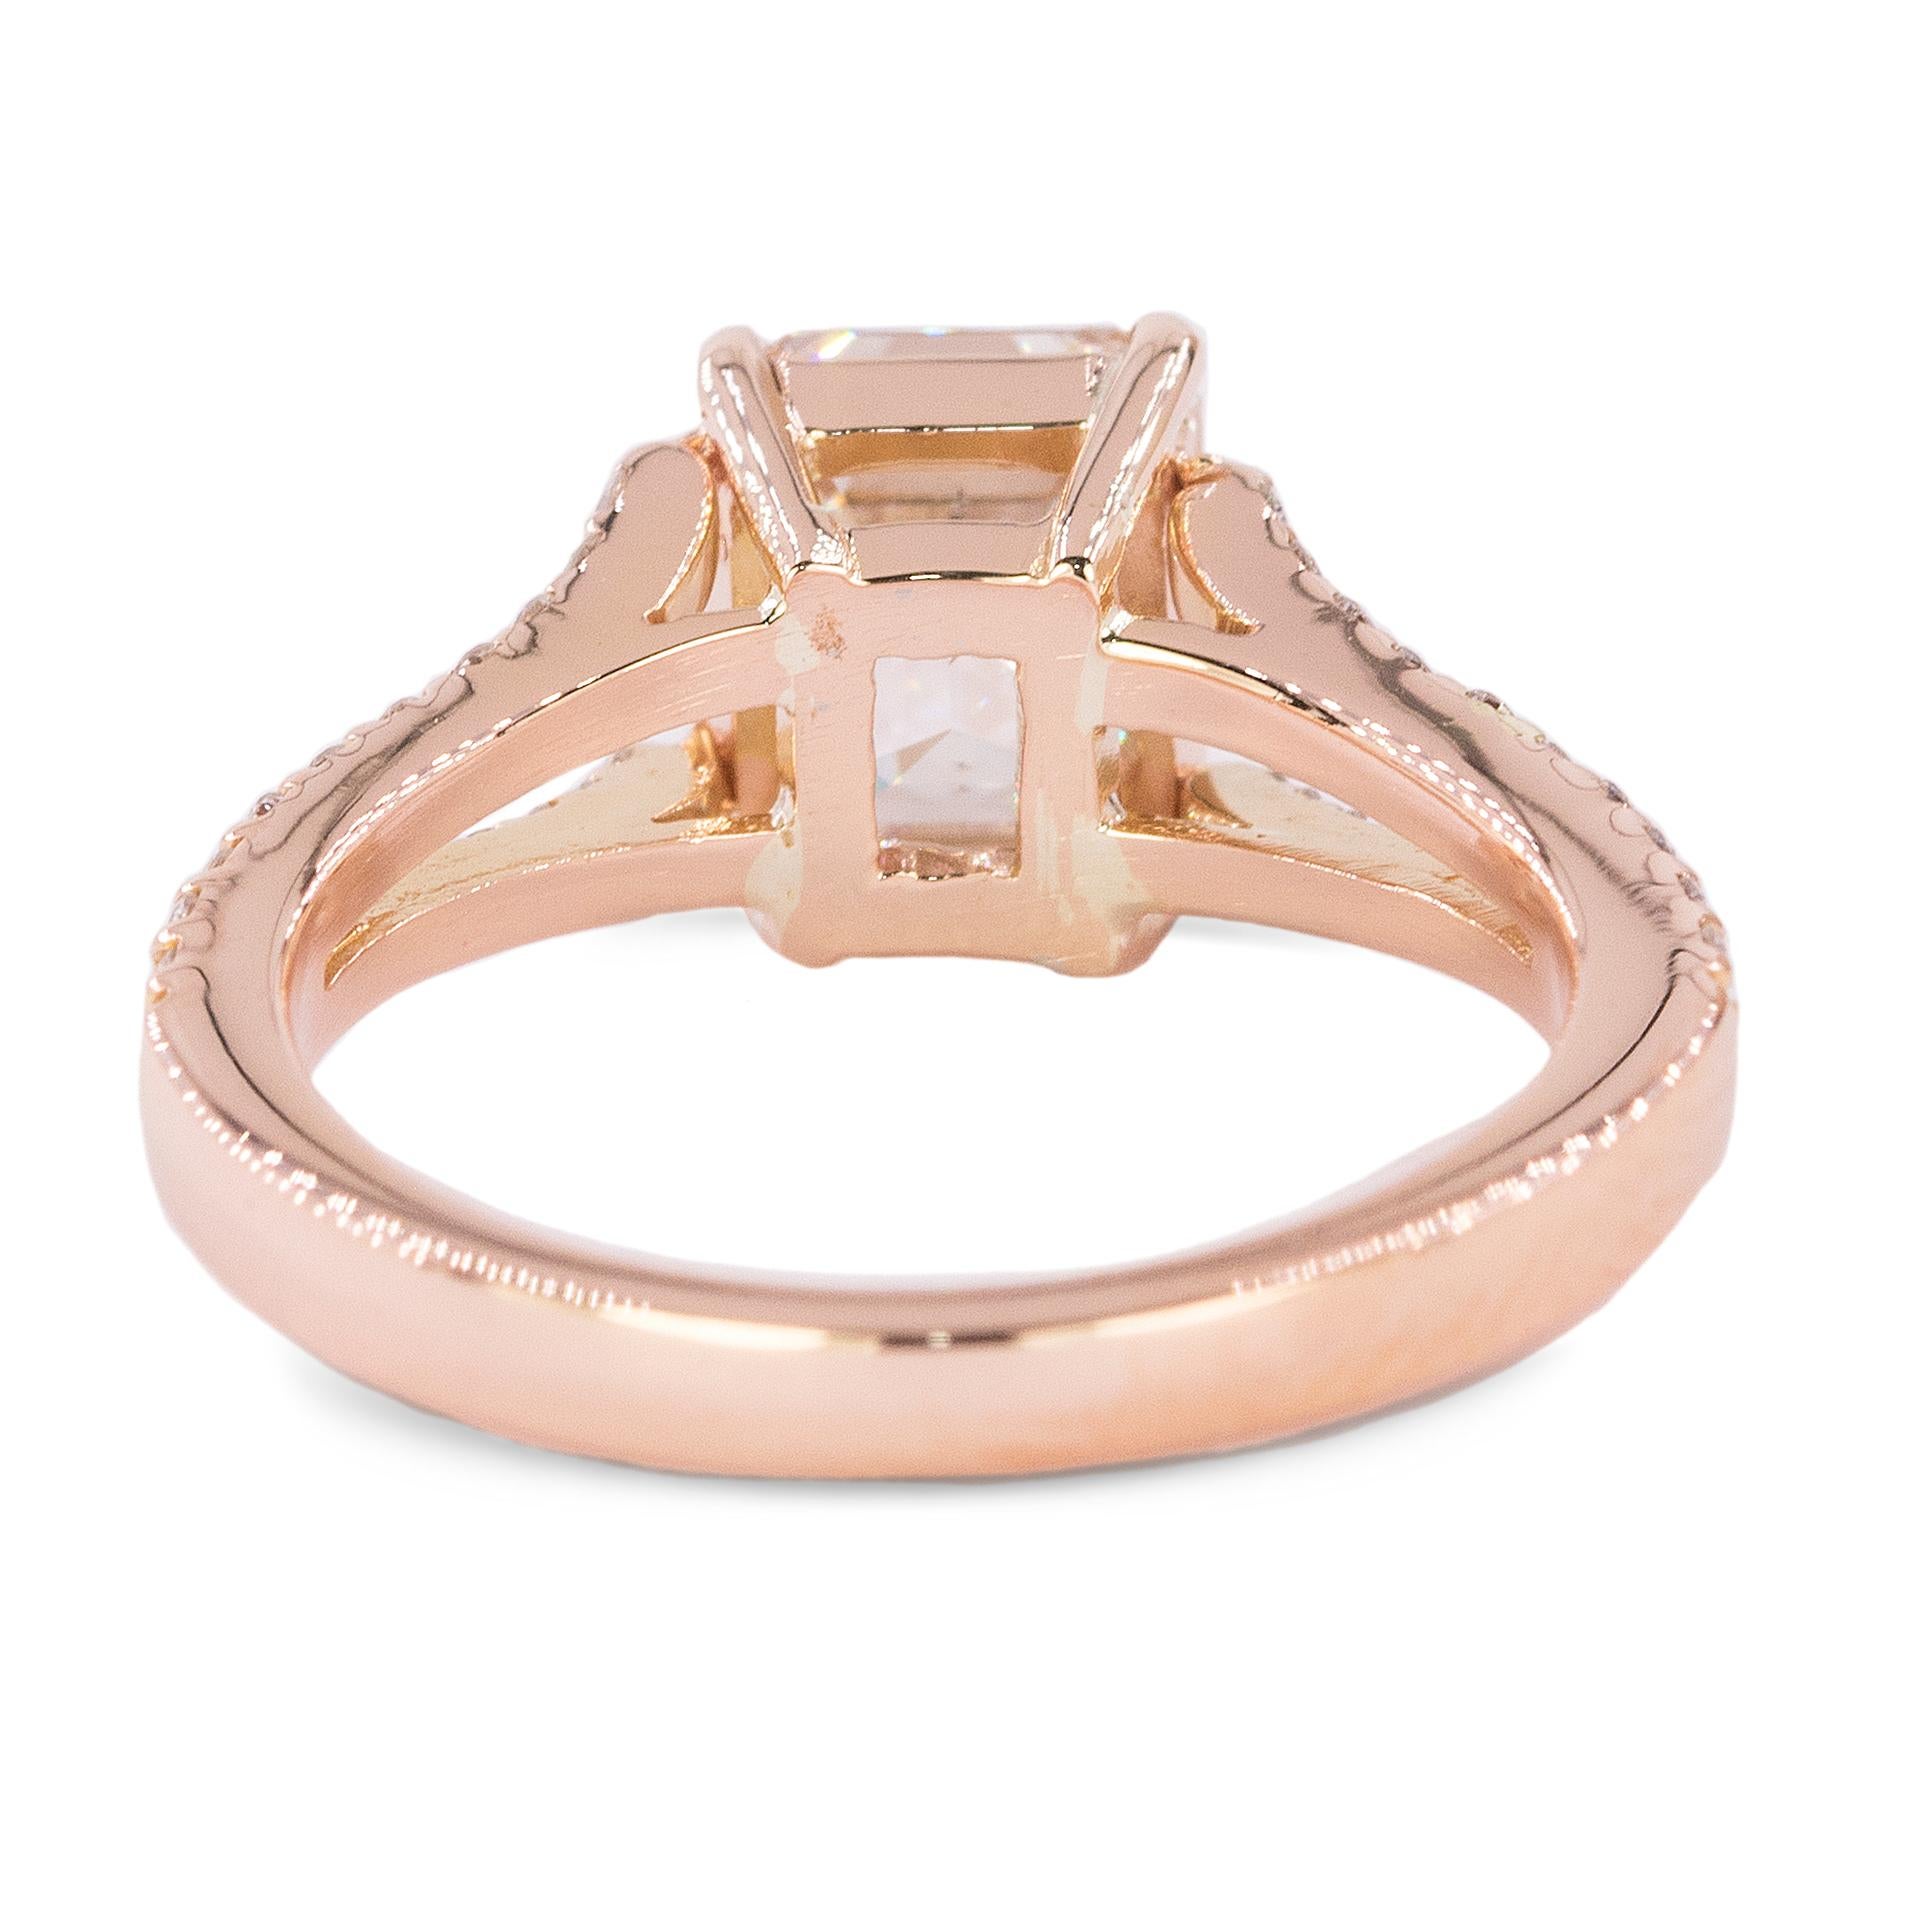 Women's or Men's 18 Karat Rose Gold Ring with 2.02 Carat GIA Certified Emerald Cut Diamond For Sale